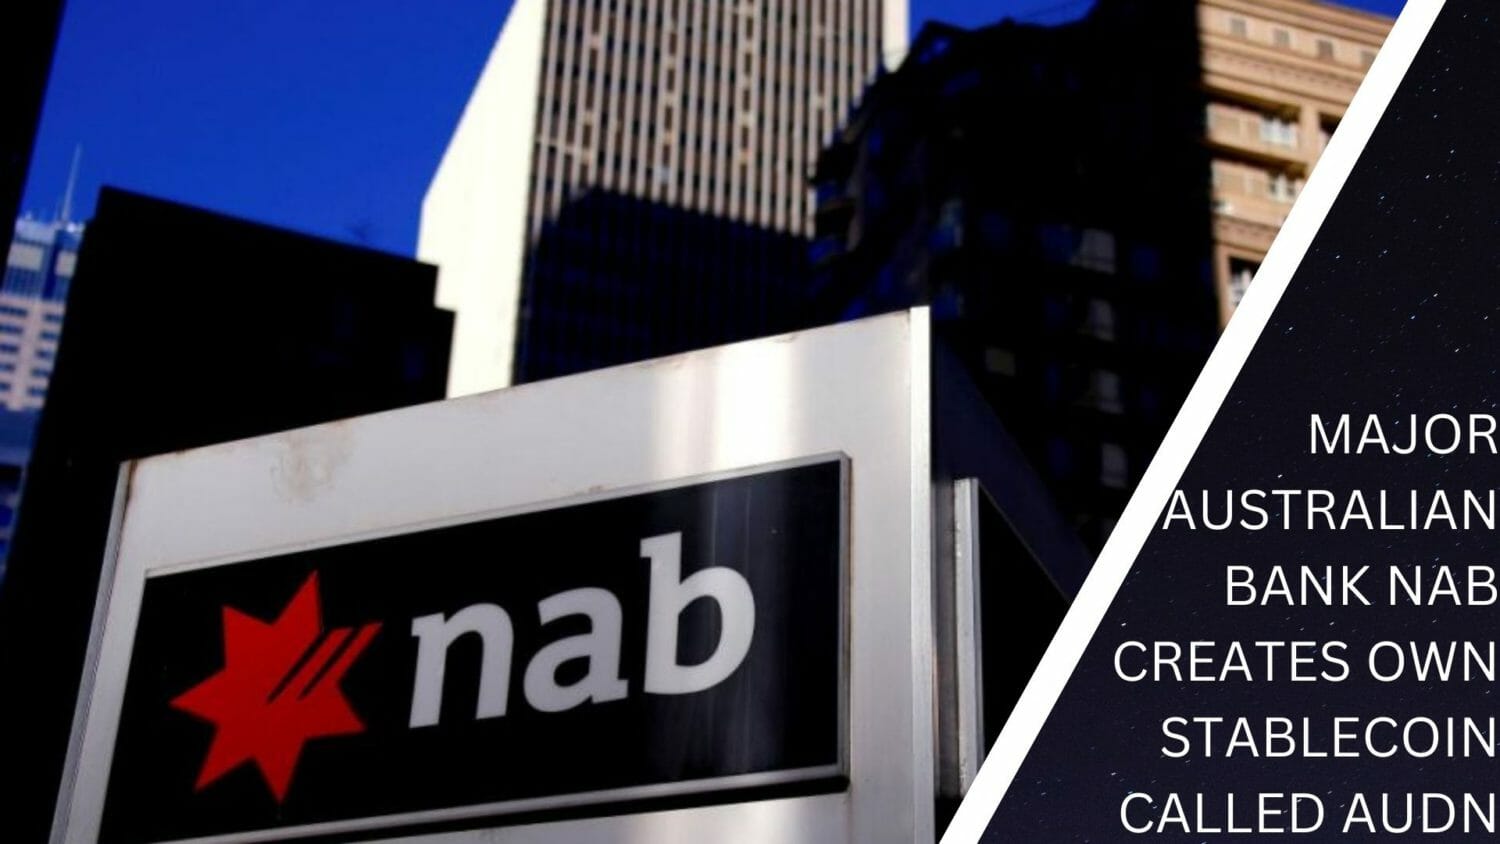 Major Australian Bank Nab Creates Own Stablecoin Called Audn